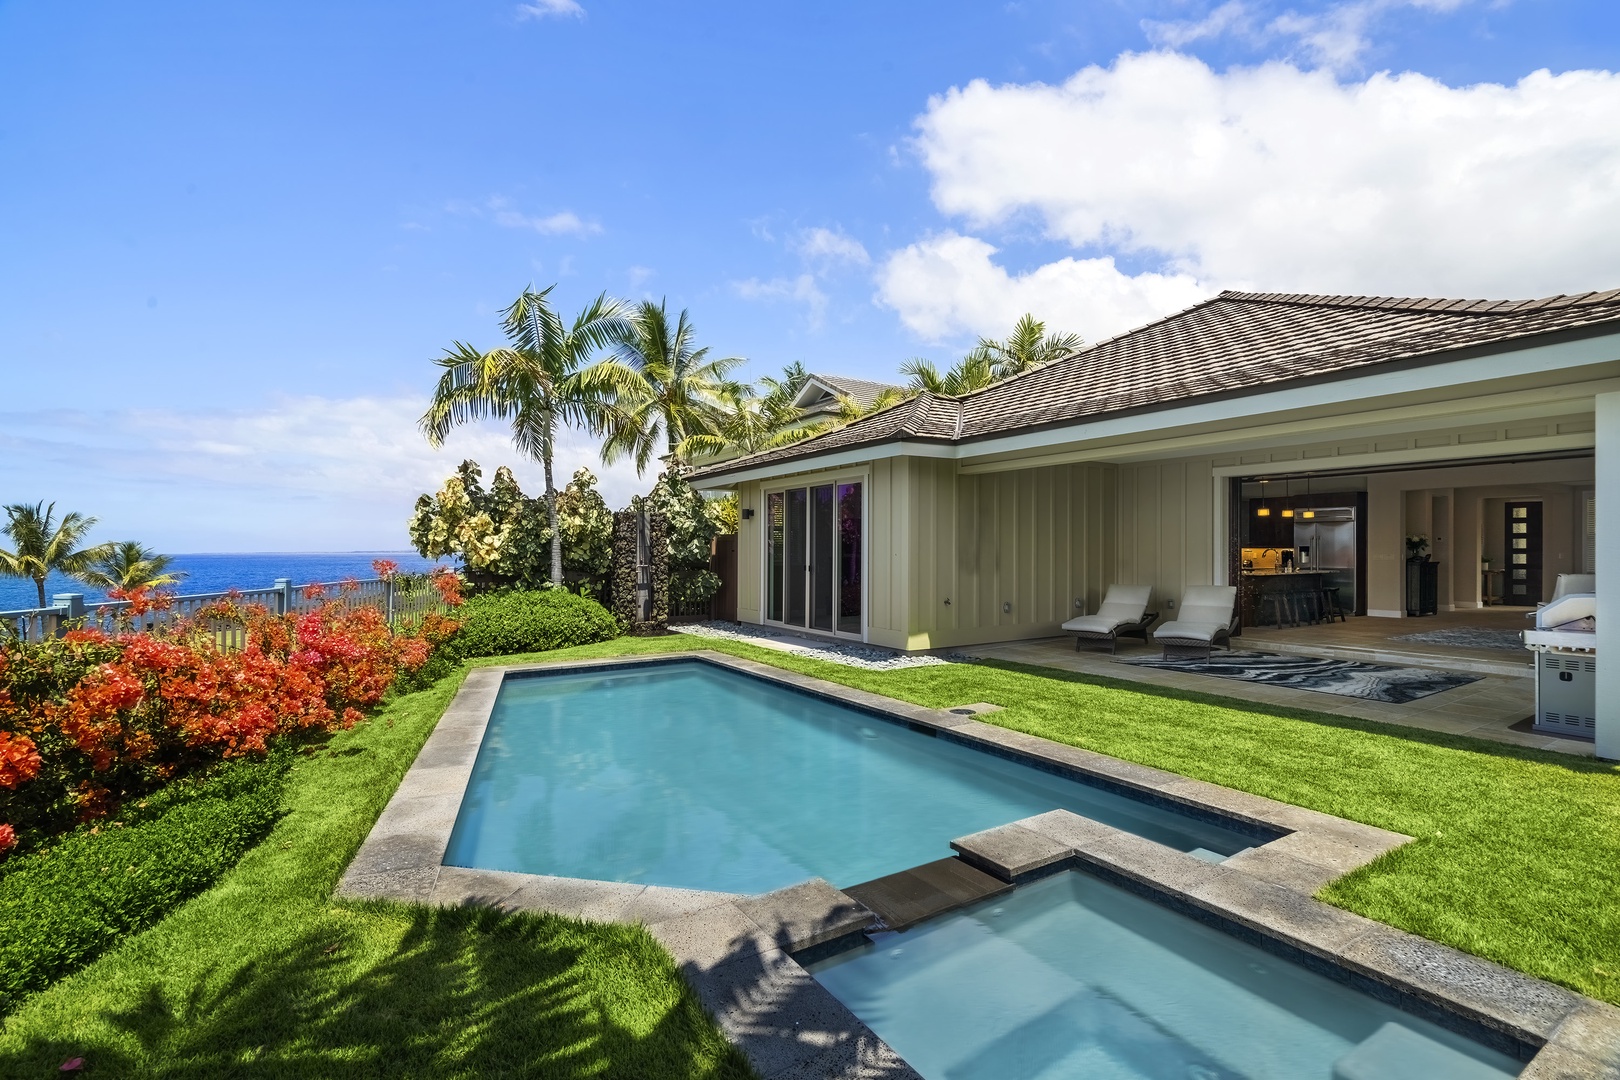 Kailua Kona Vacation Rentals, Blue Orca - Back yard in Paradise!